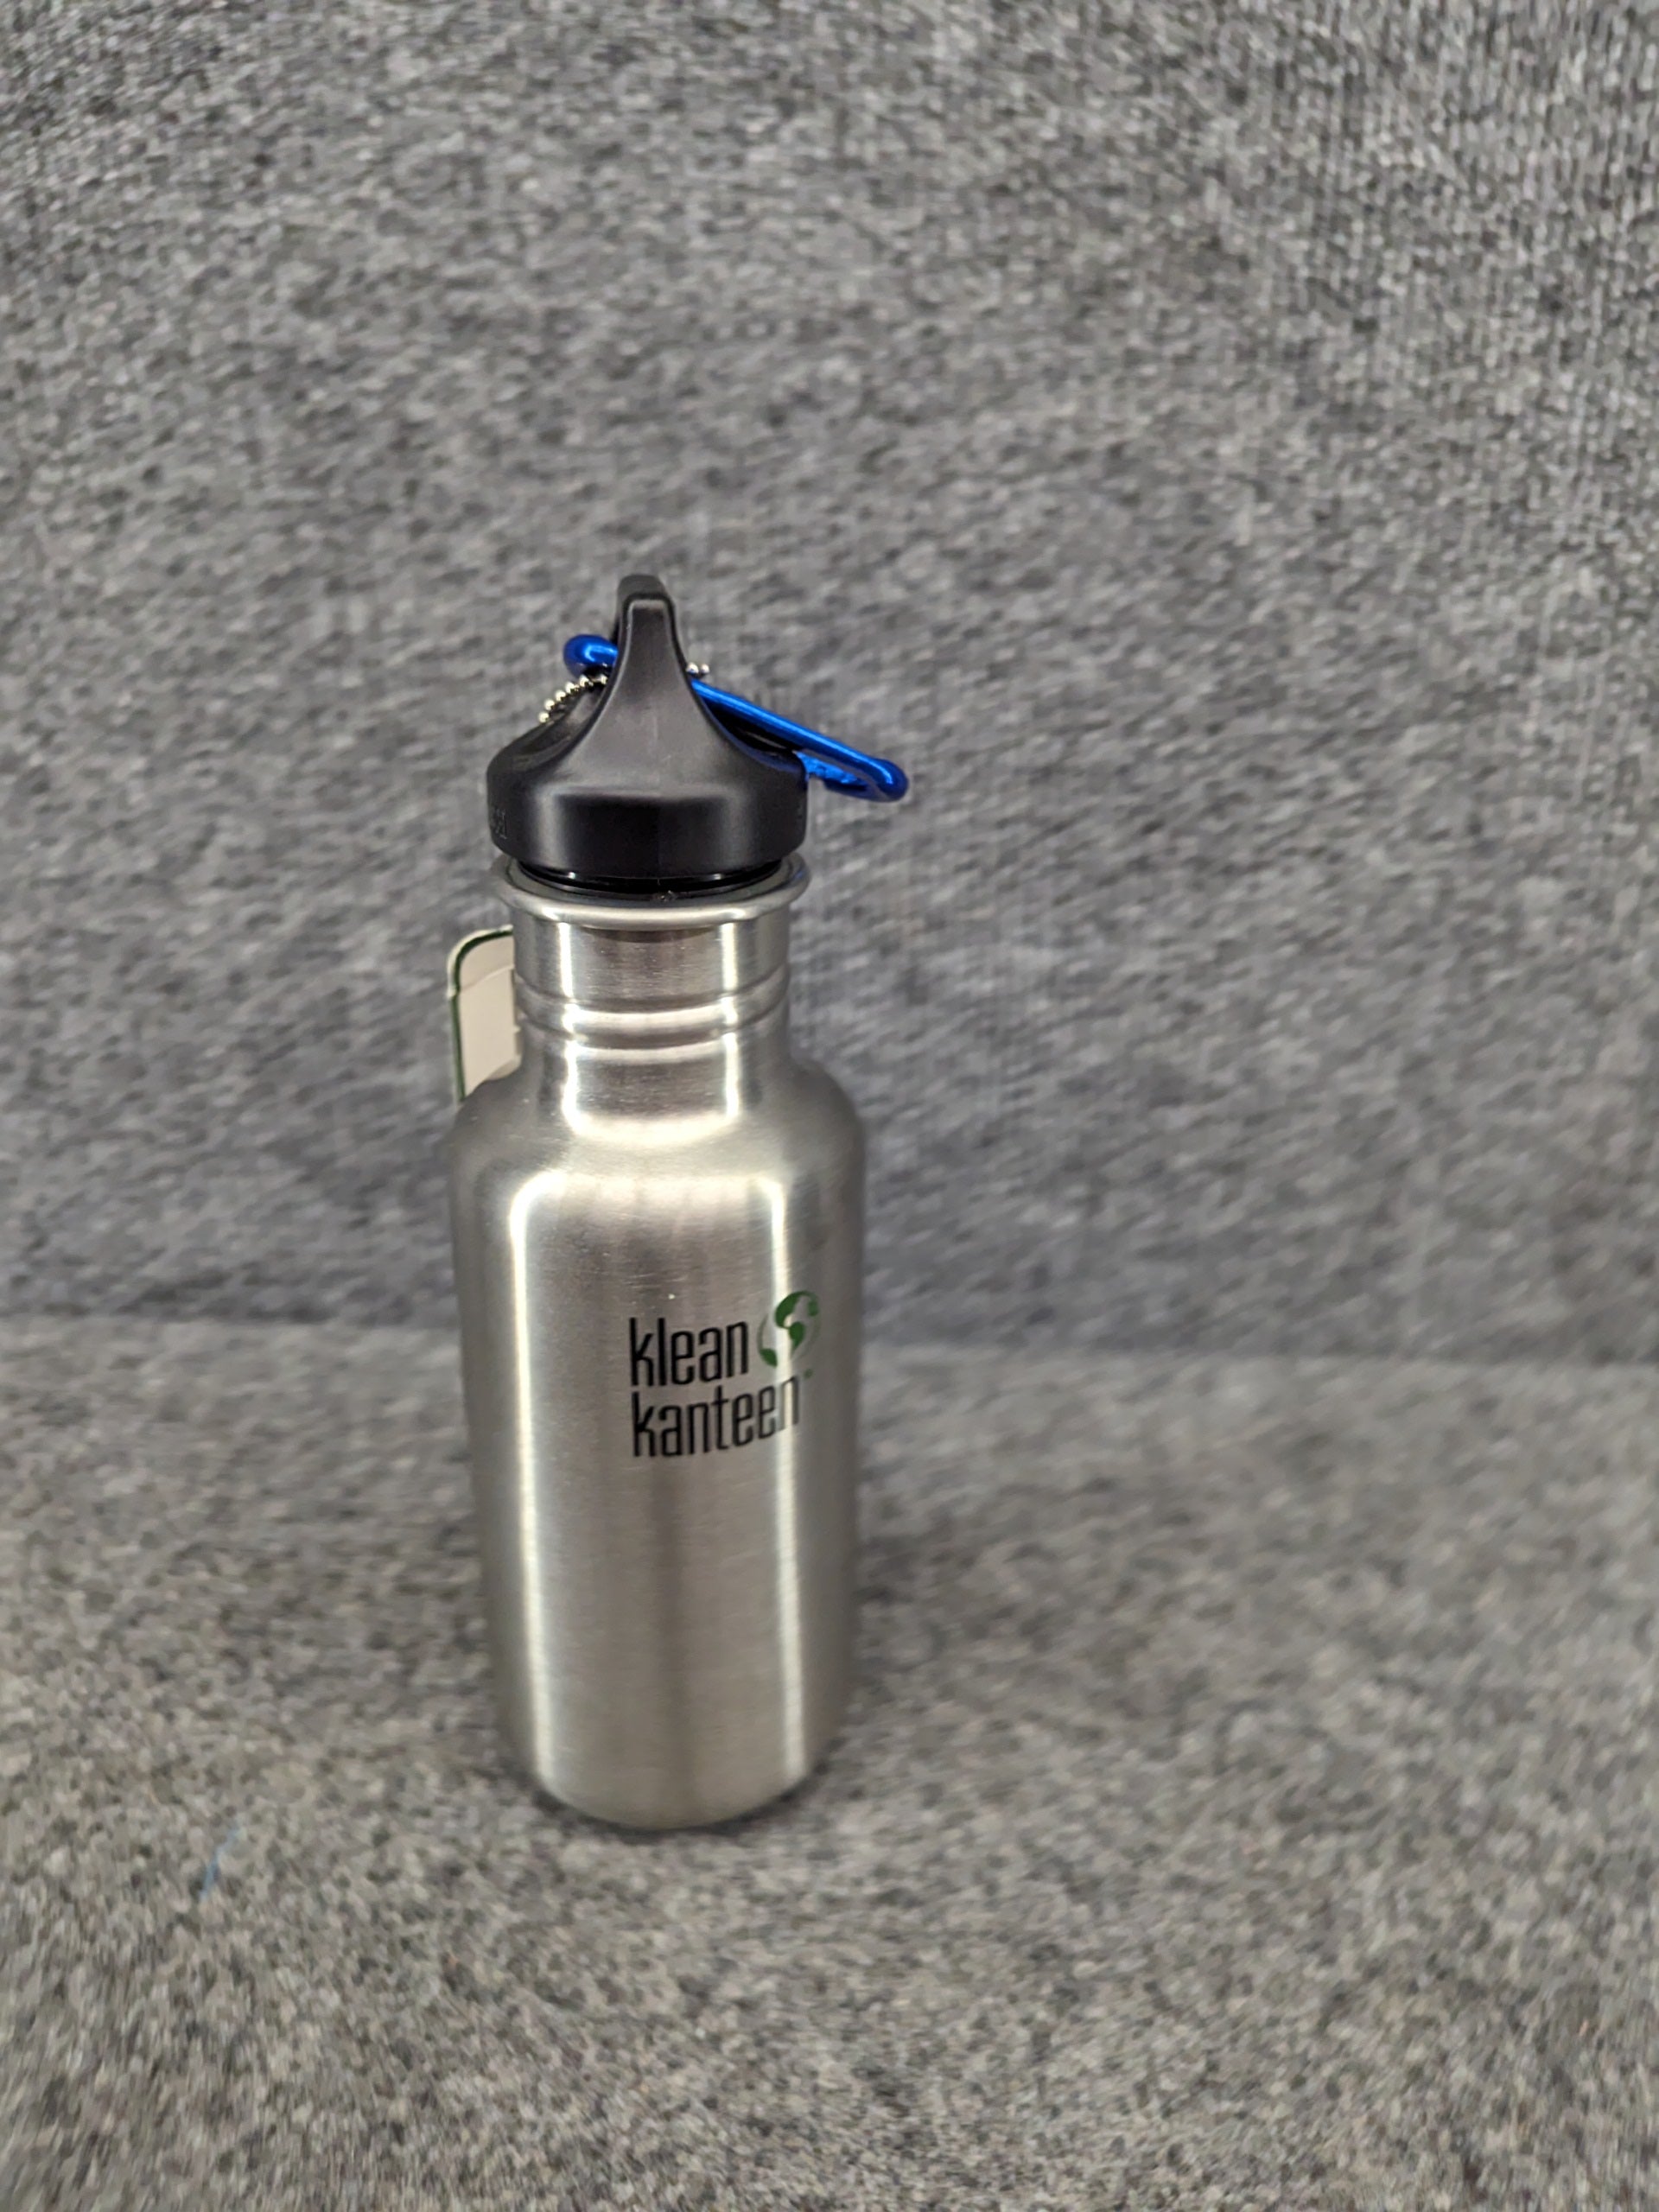 Klean Kanteen 27oz Stainless Steel Water Bottle